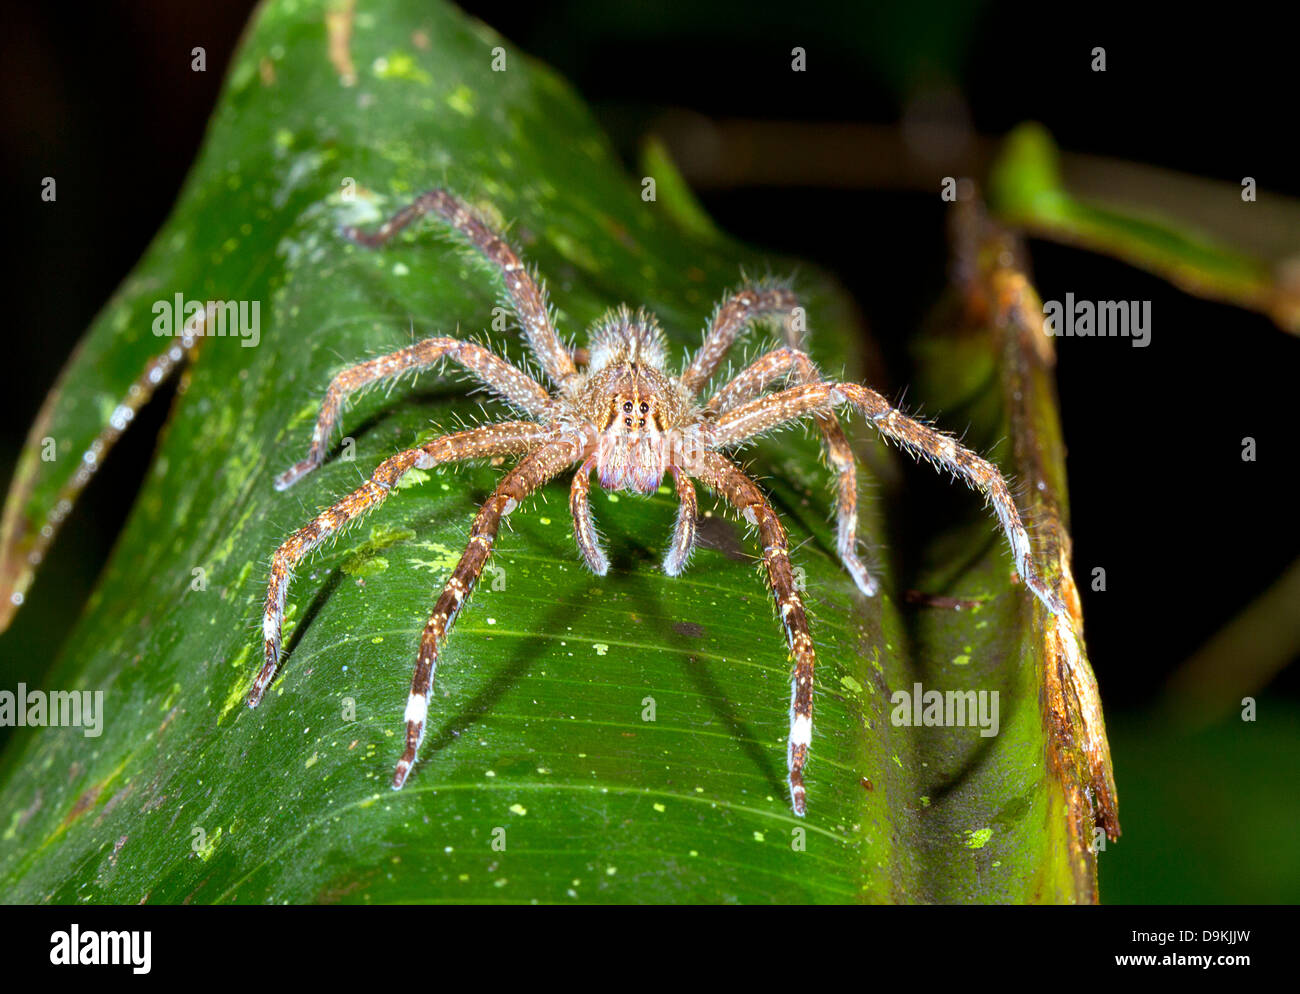 Venomous wandering spider (Phoneutria sp.) looking at the camera, ecuador Stock Photo